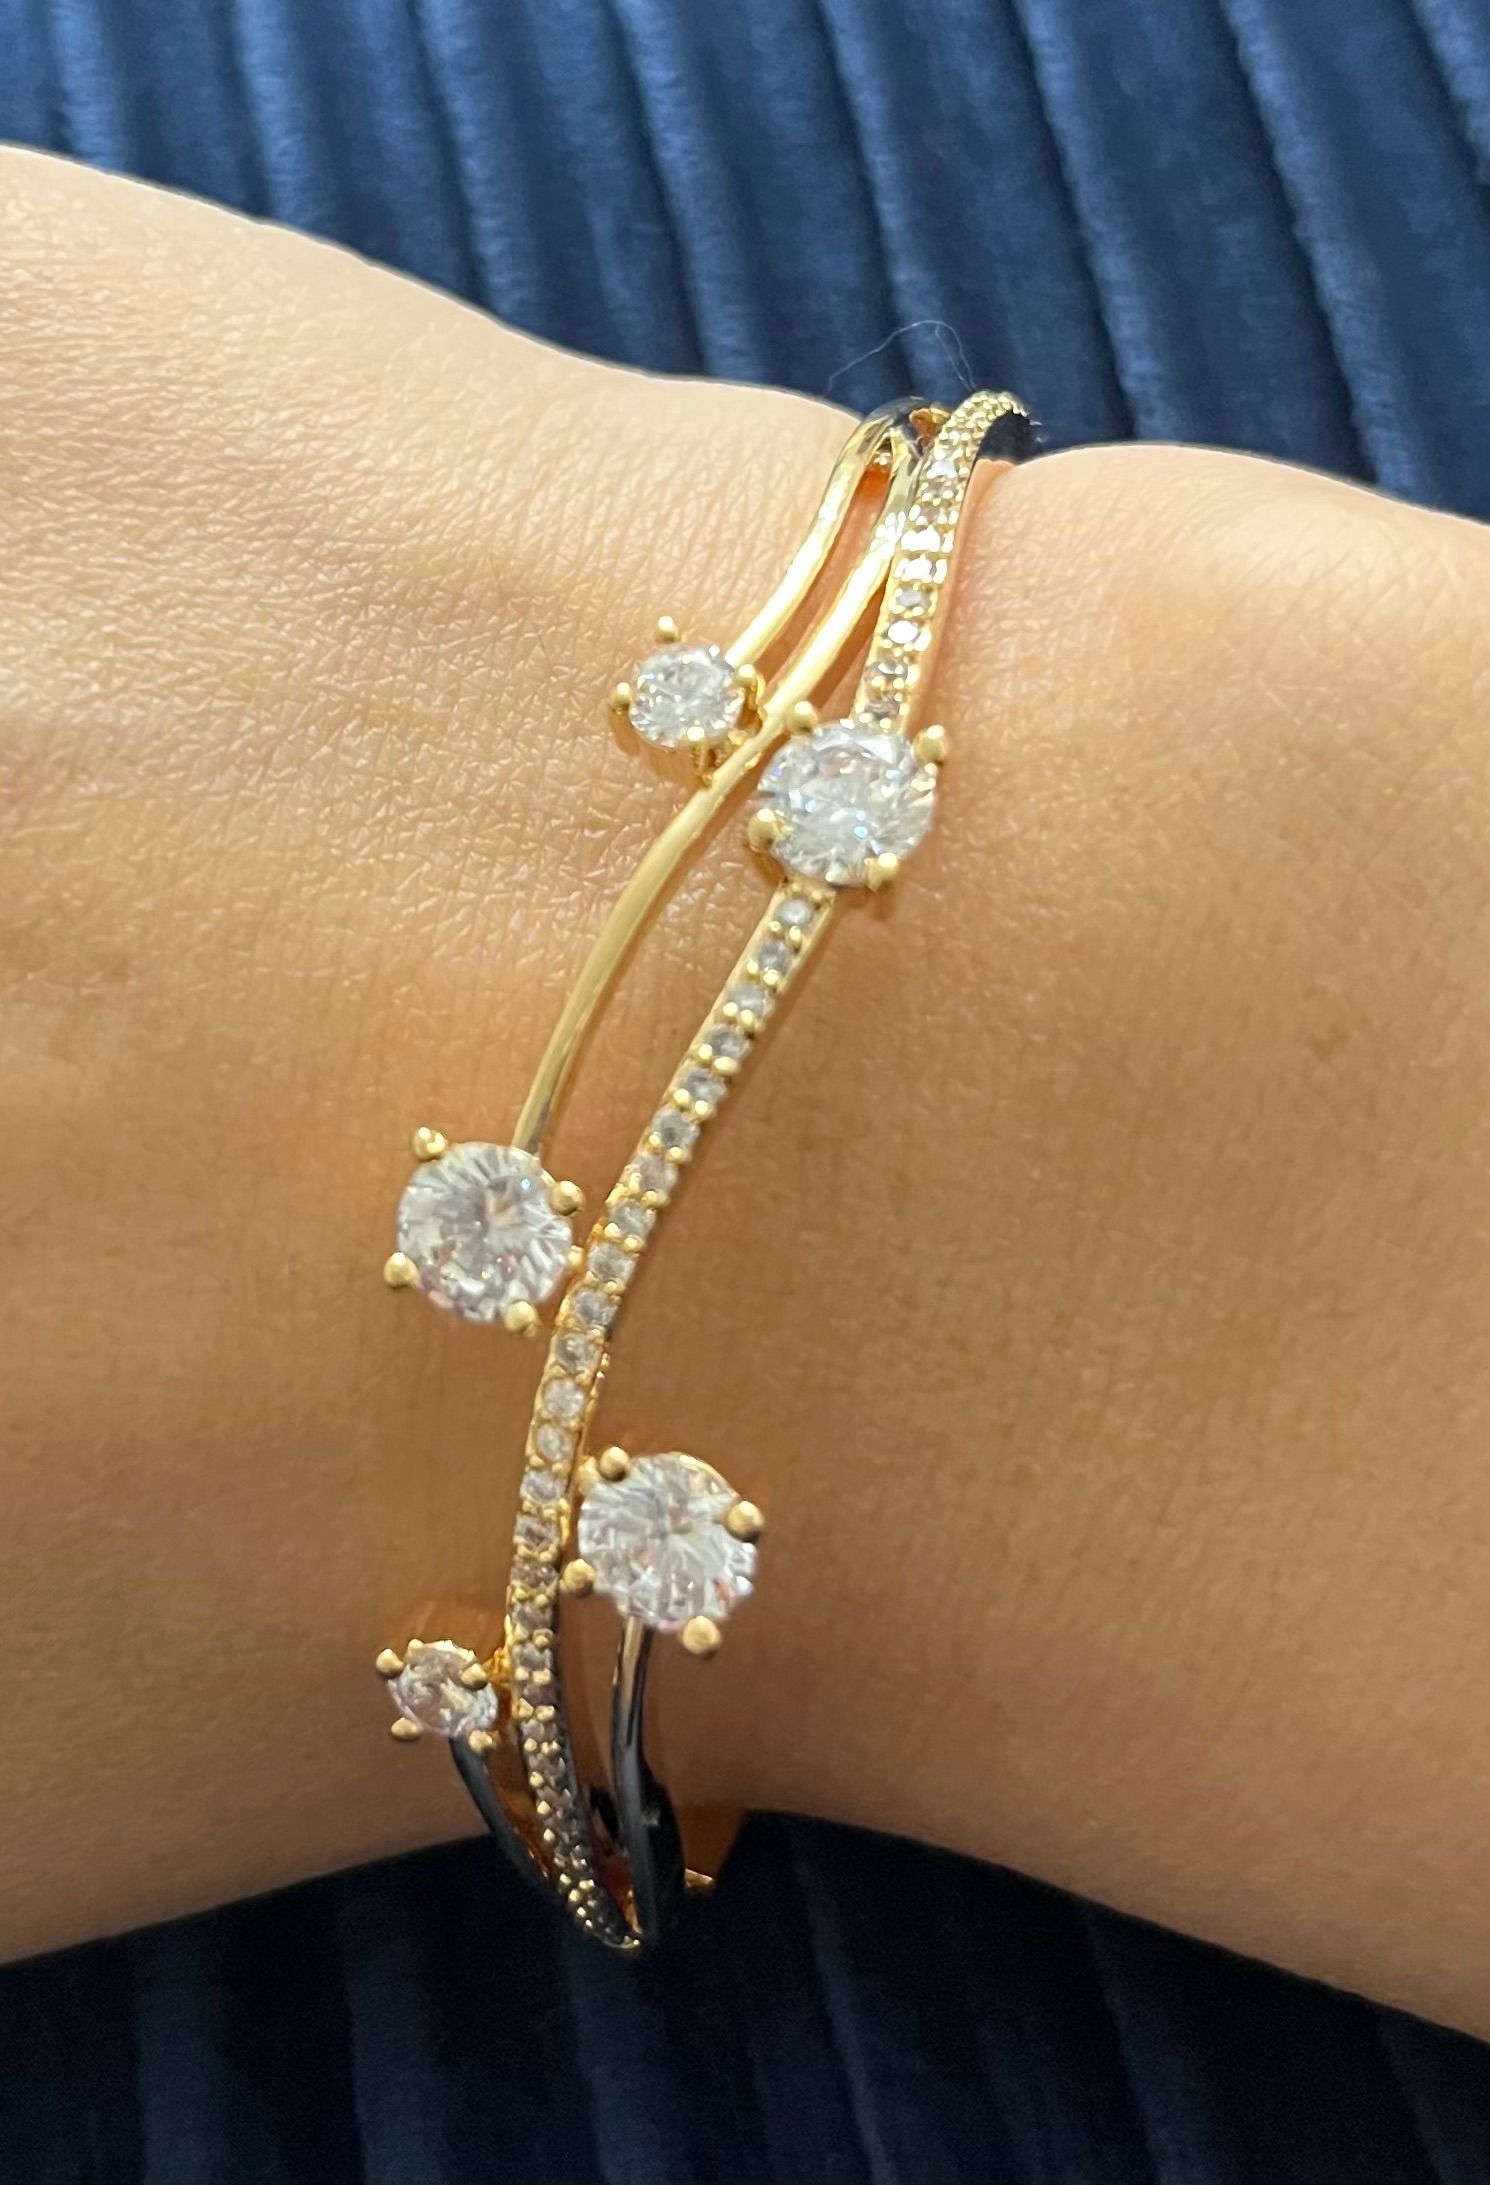 Stunning bracelets with unique designs